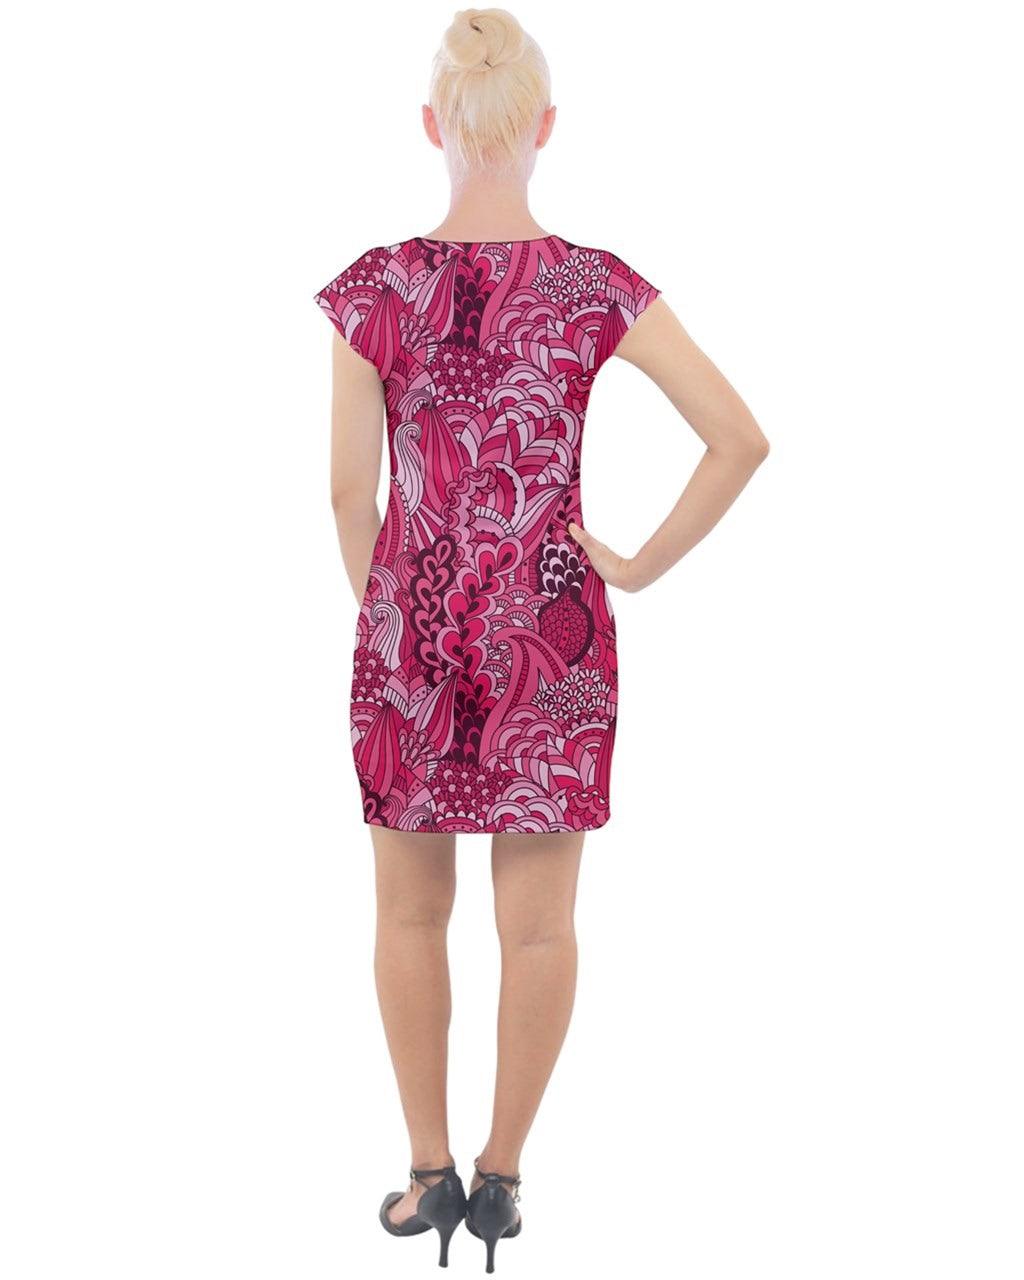 Loa Cap Sleeve Bodycon Dress - Blissfully Brand